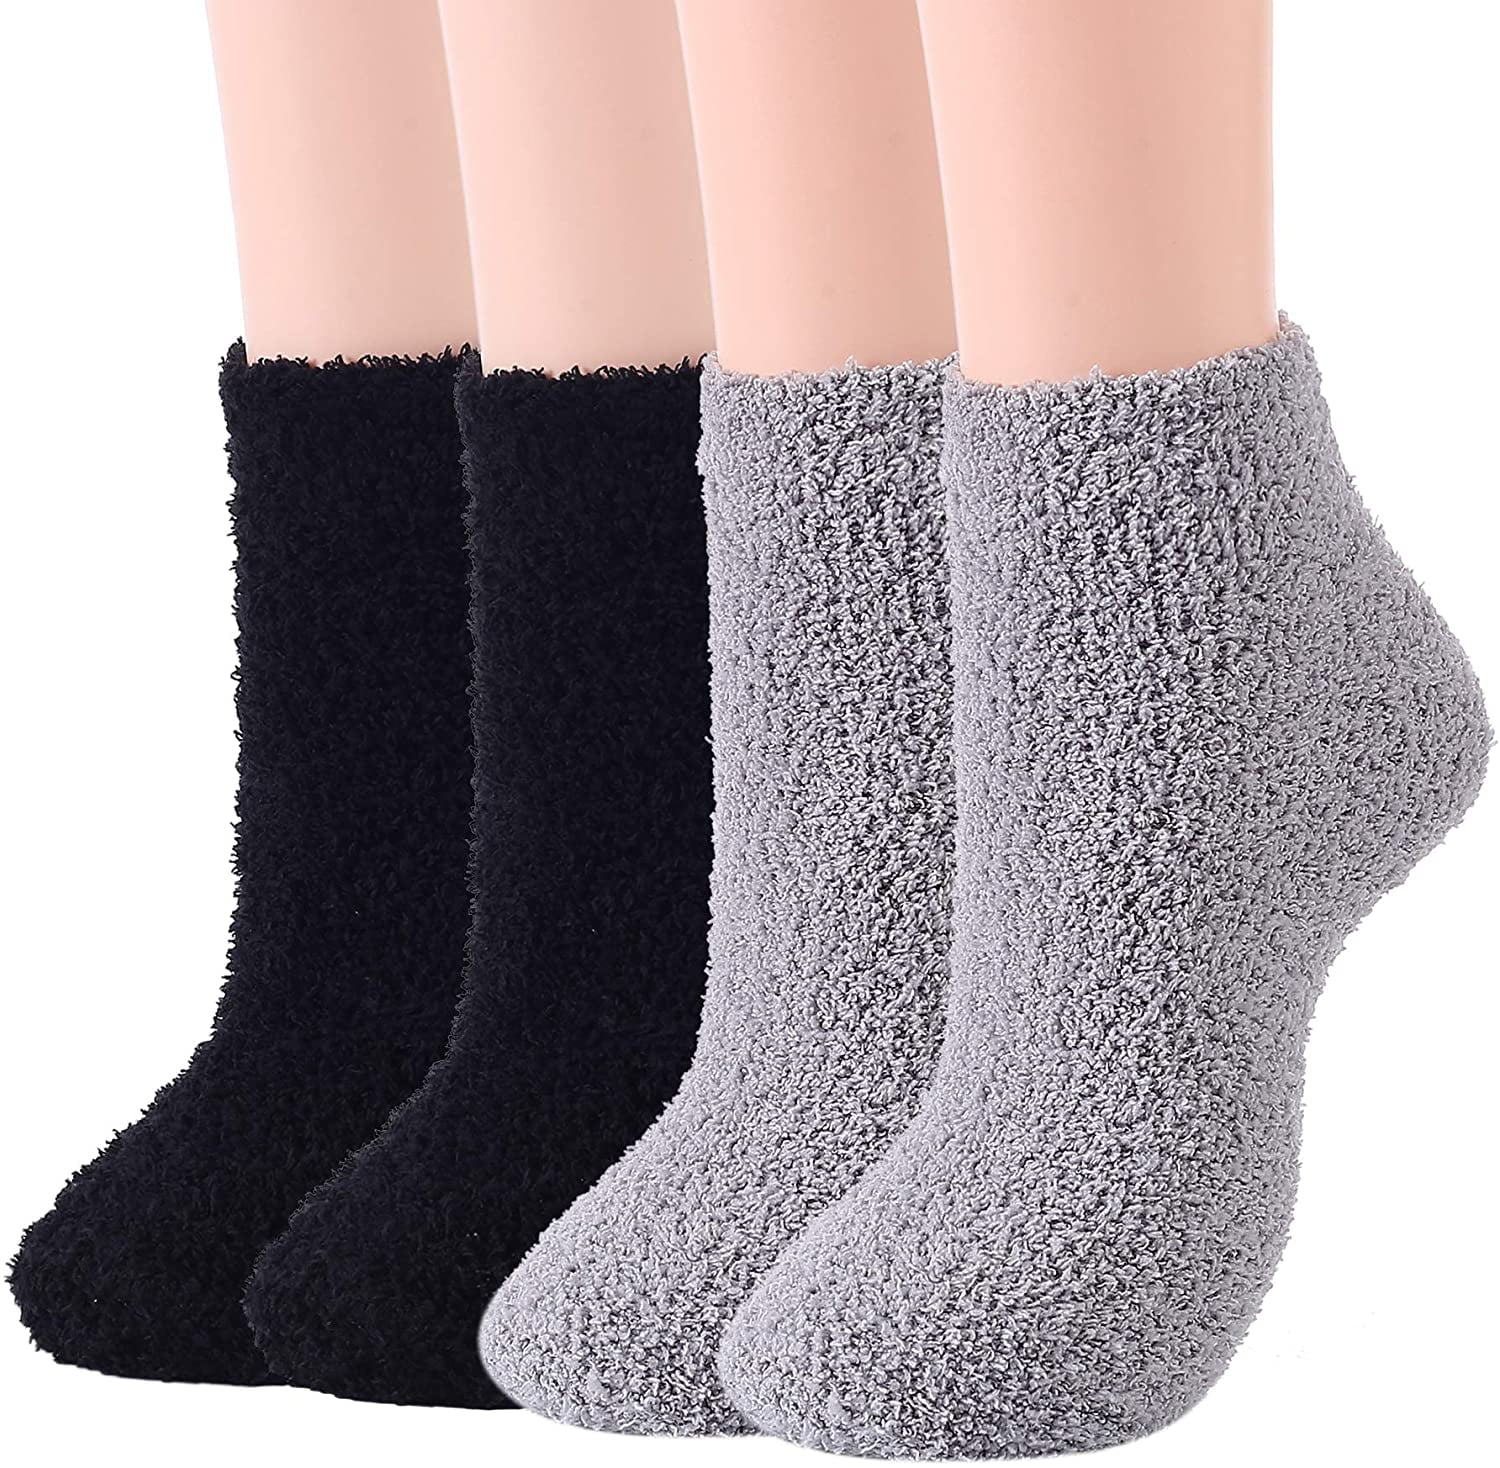 Winter Fuzzy Socks For Women Plush Slipper Socks Thick Cozy Fuzzy Socks 5 Pairs Knitting Warm Fluffy Crew Socks